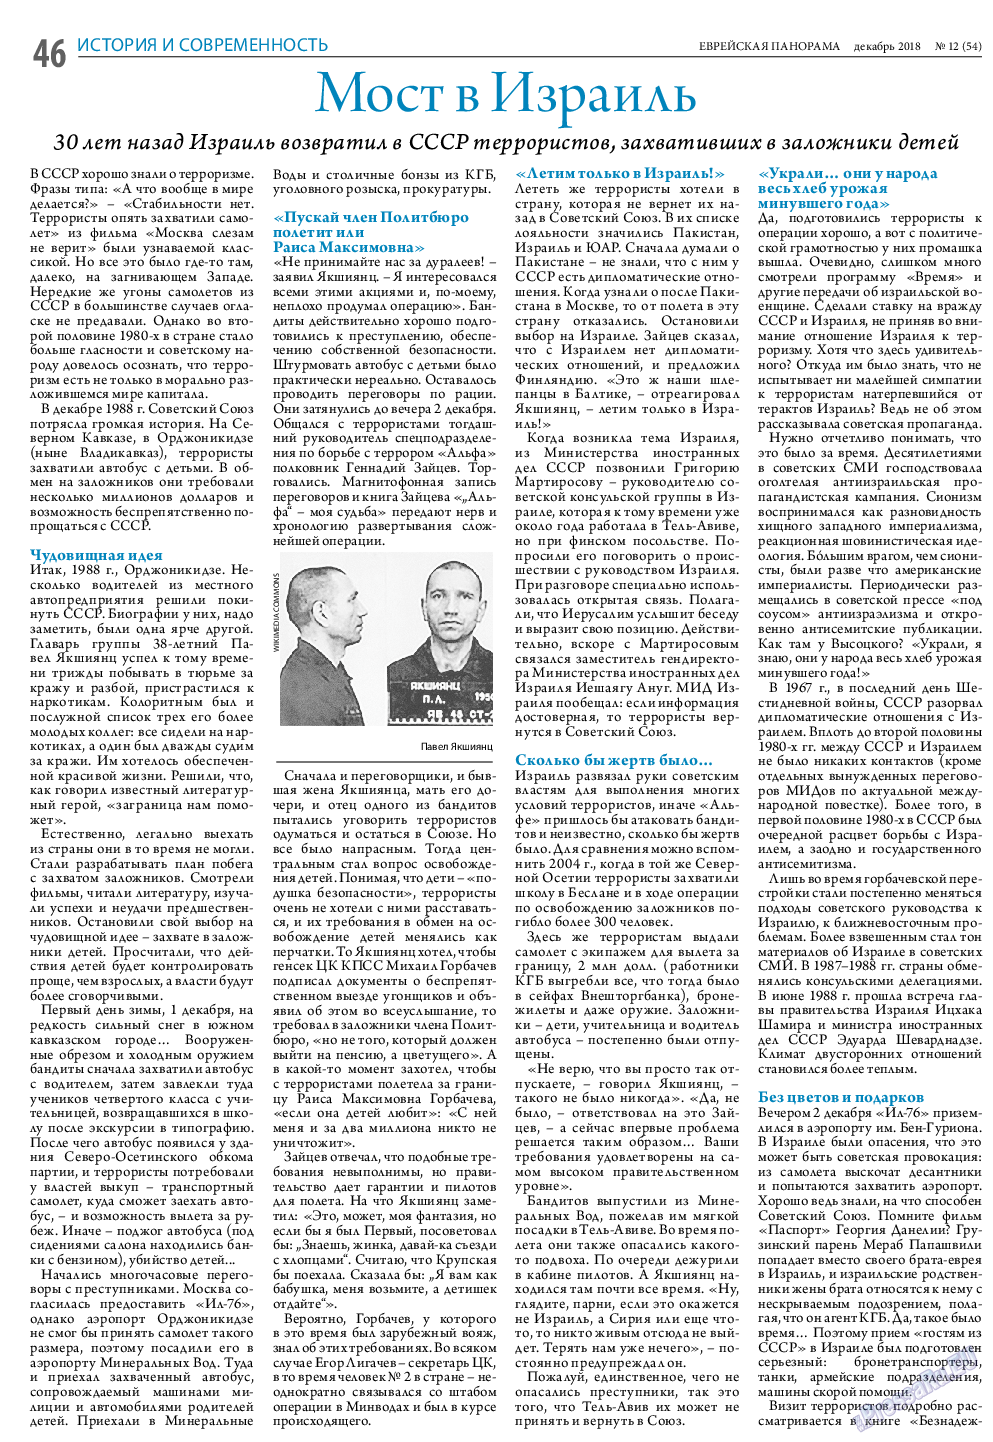 Еврейская панорама, газета. 2018 №12 стр.46